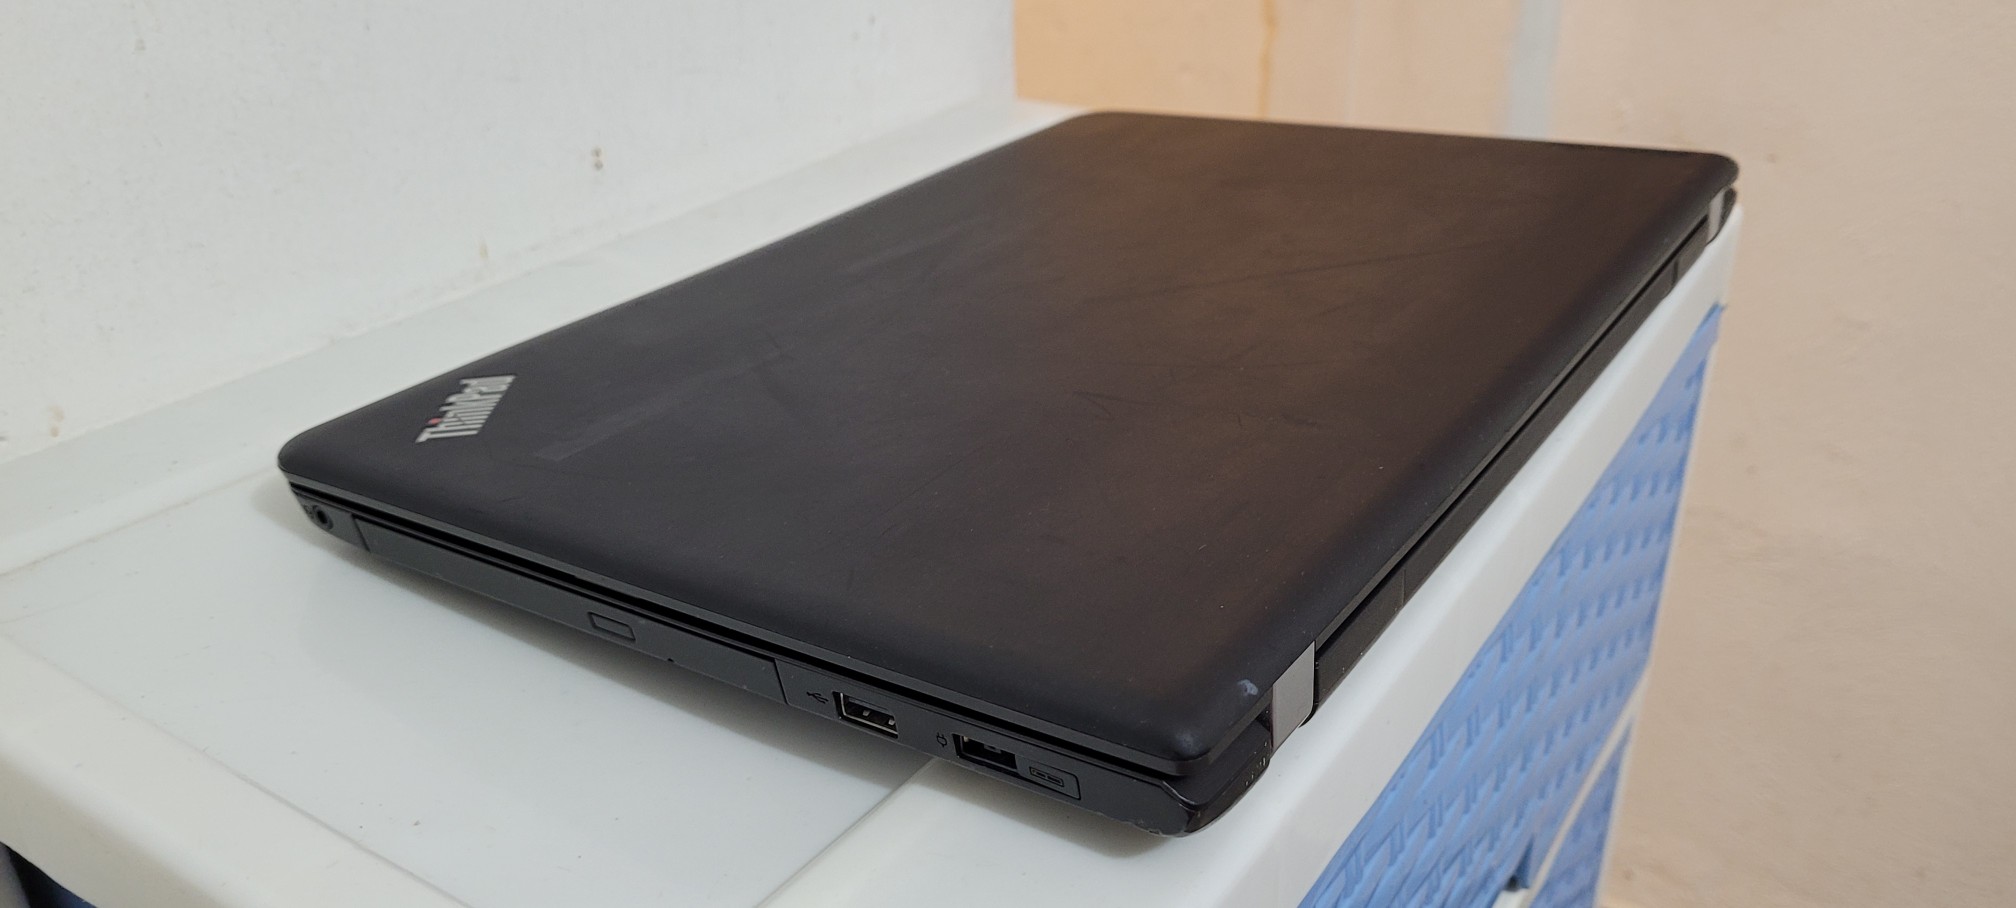 computadoras y laptops - Lenovo E560 17 Pulg Core i7 6ta Gen Ram 16gb Doble tarjeta de Video full 2